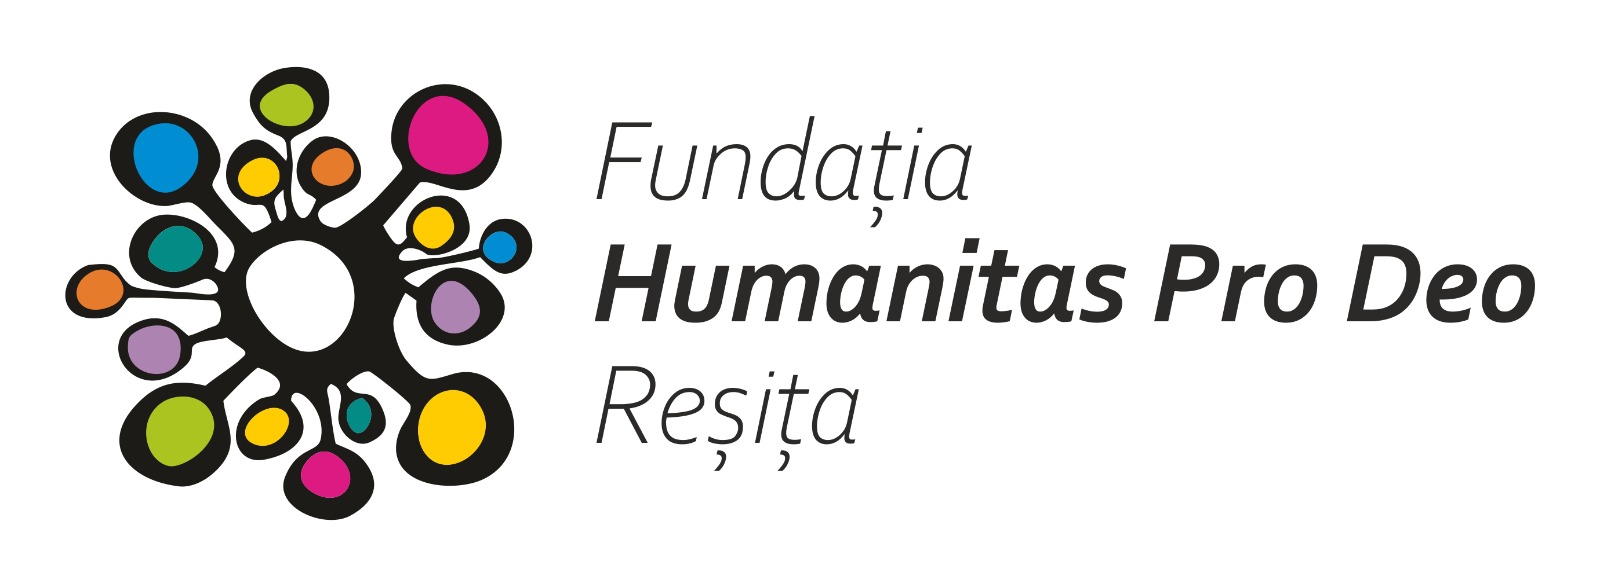 FUNDATIA HUMANITAS PRO DEO RESITA logo